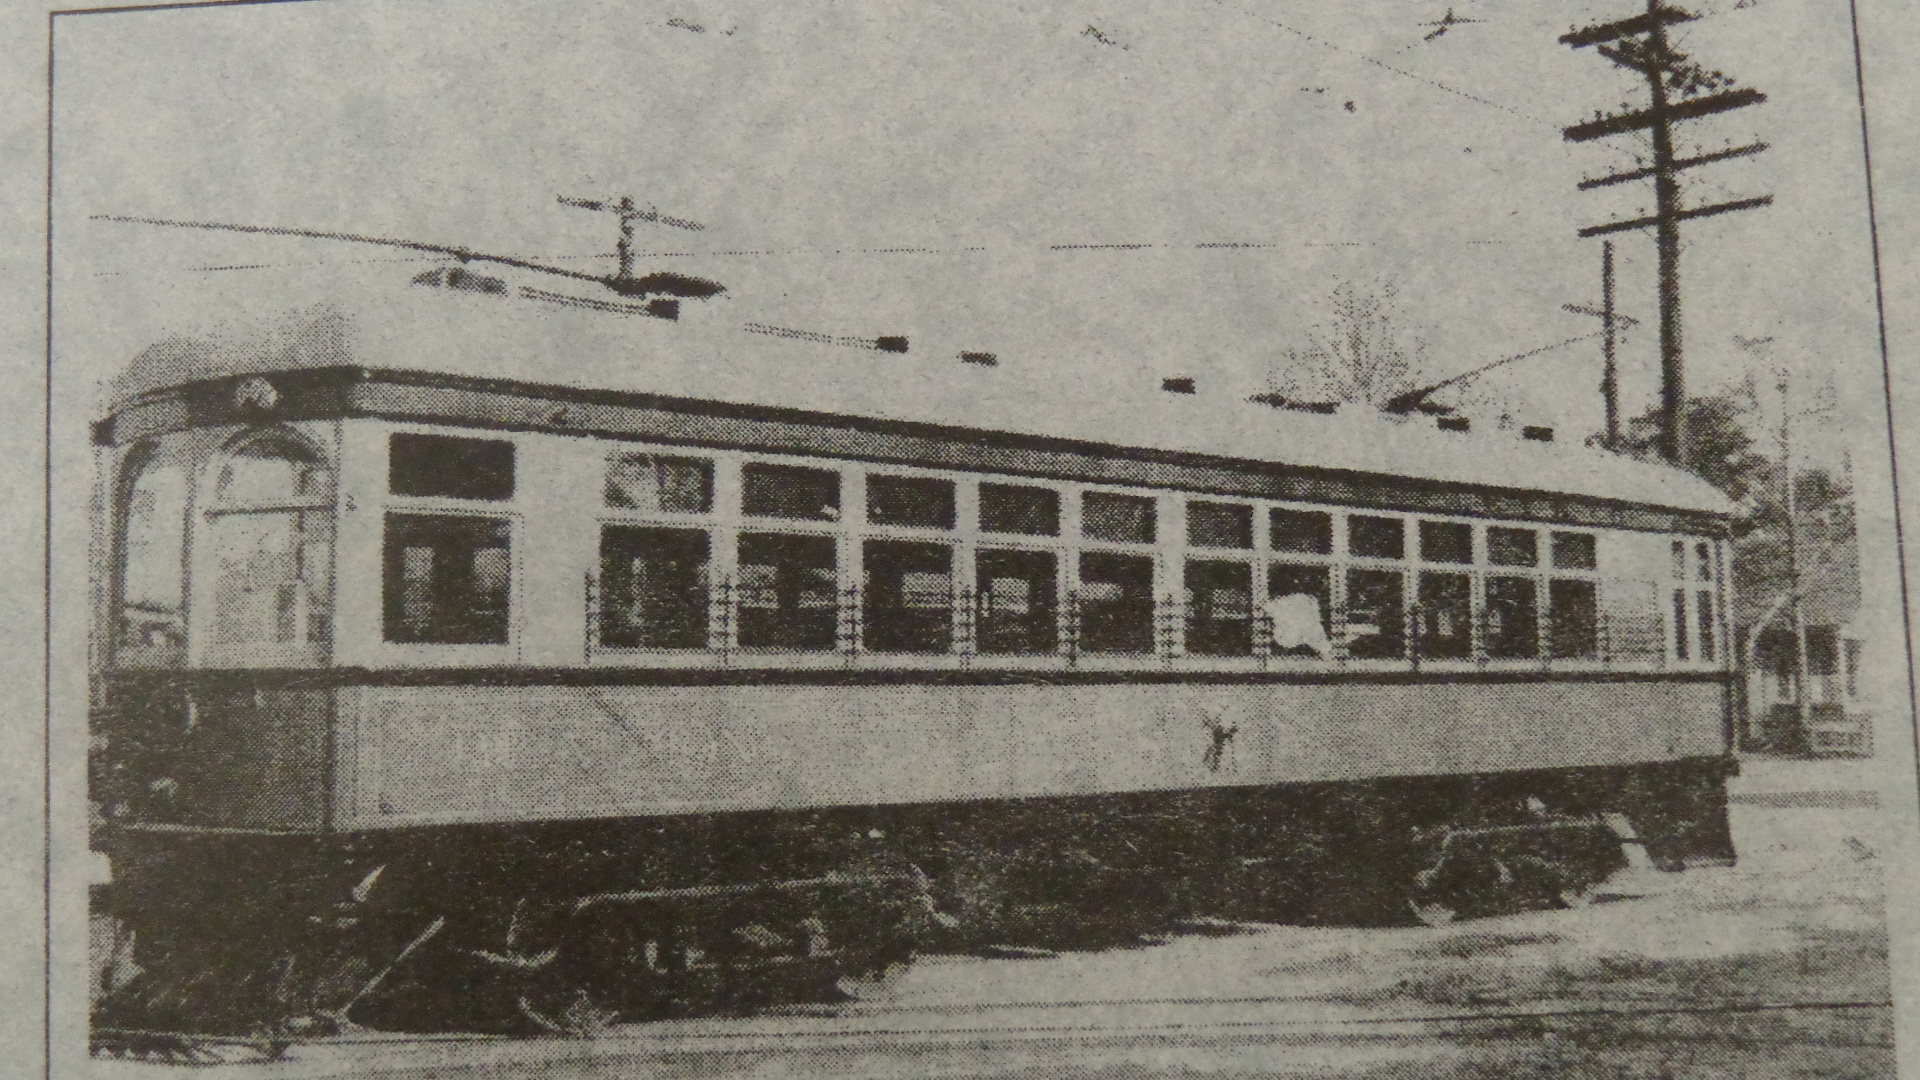 Black and white photo of a 1900s interurban rail car